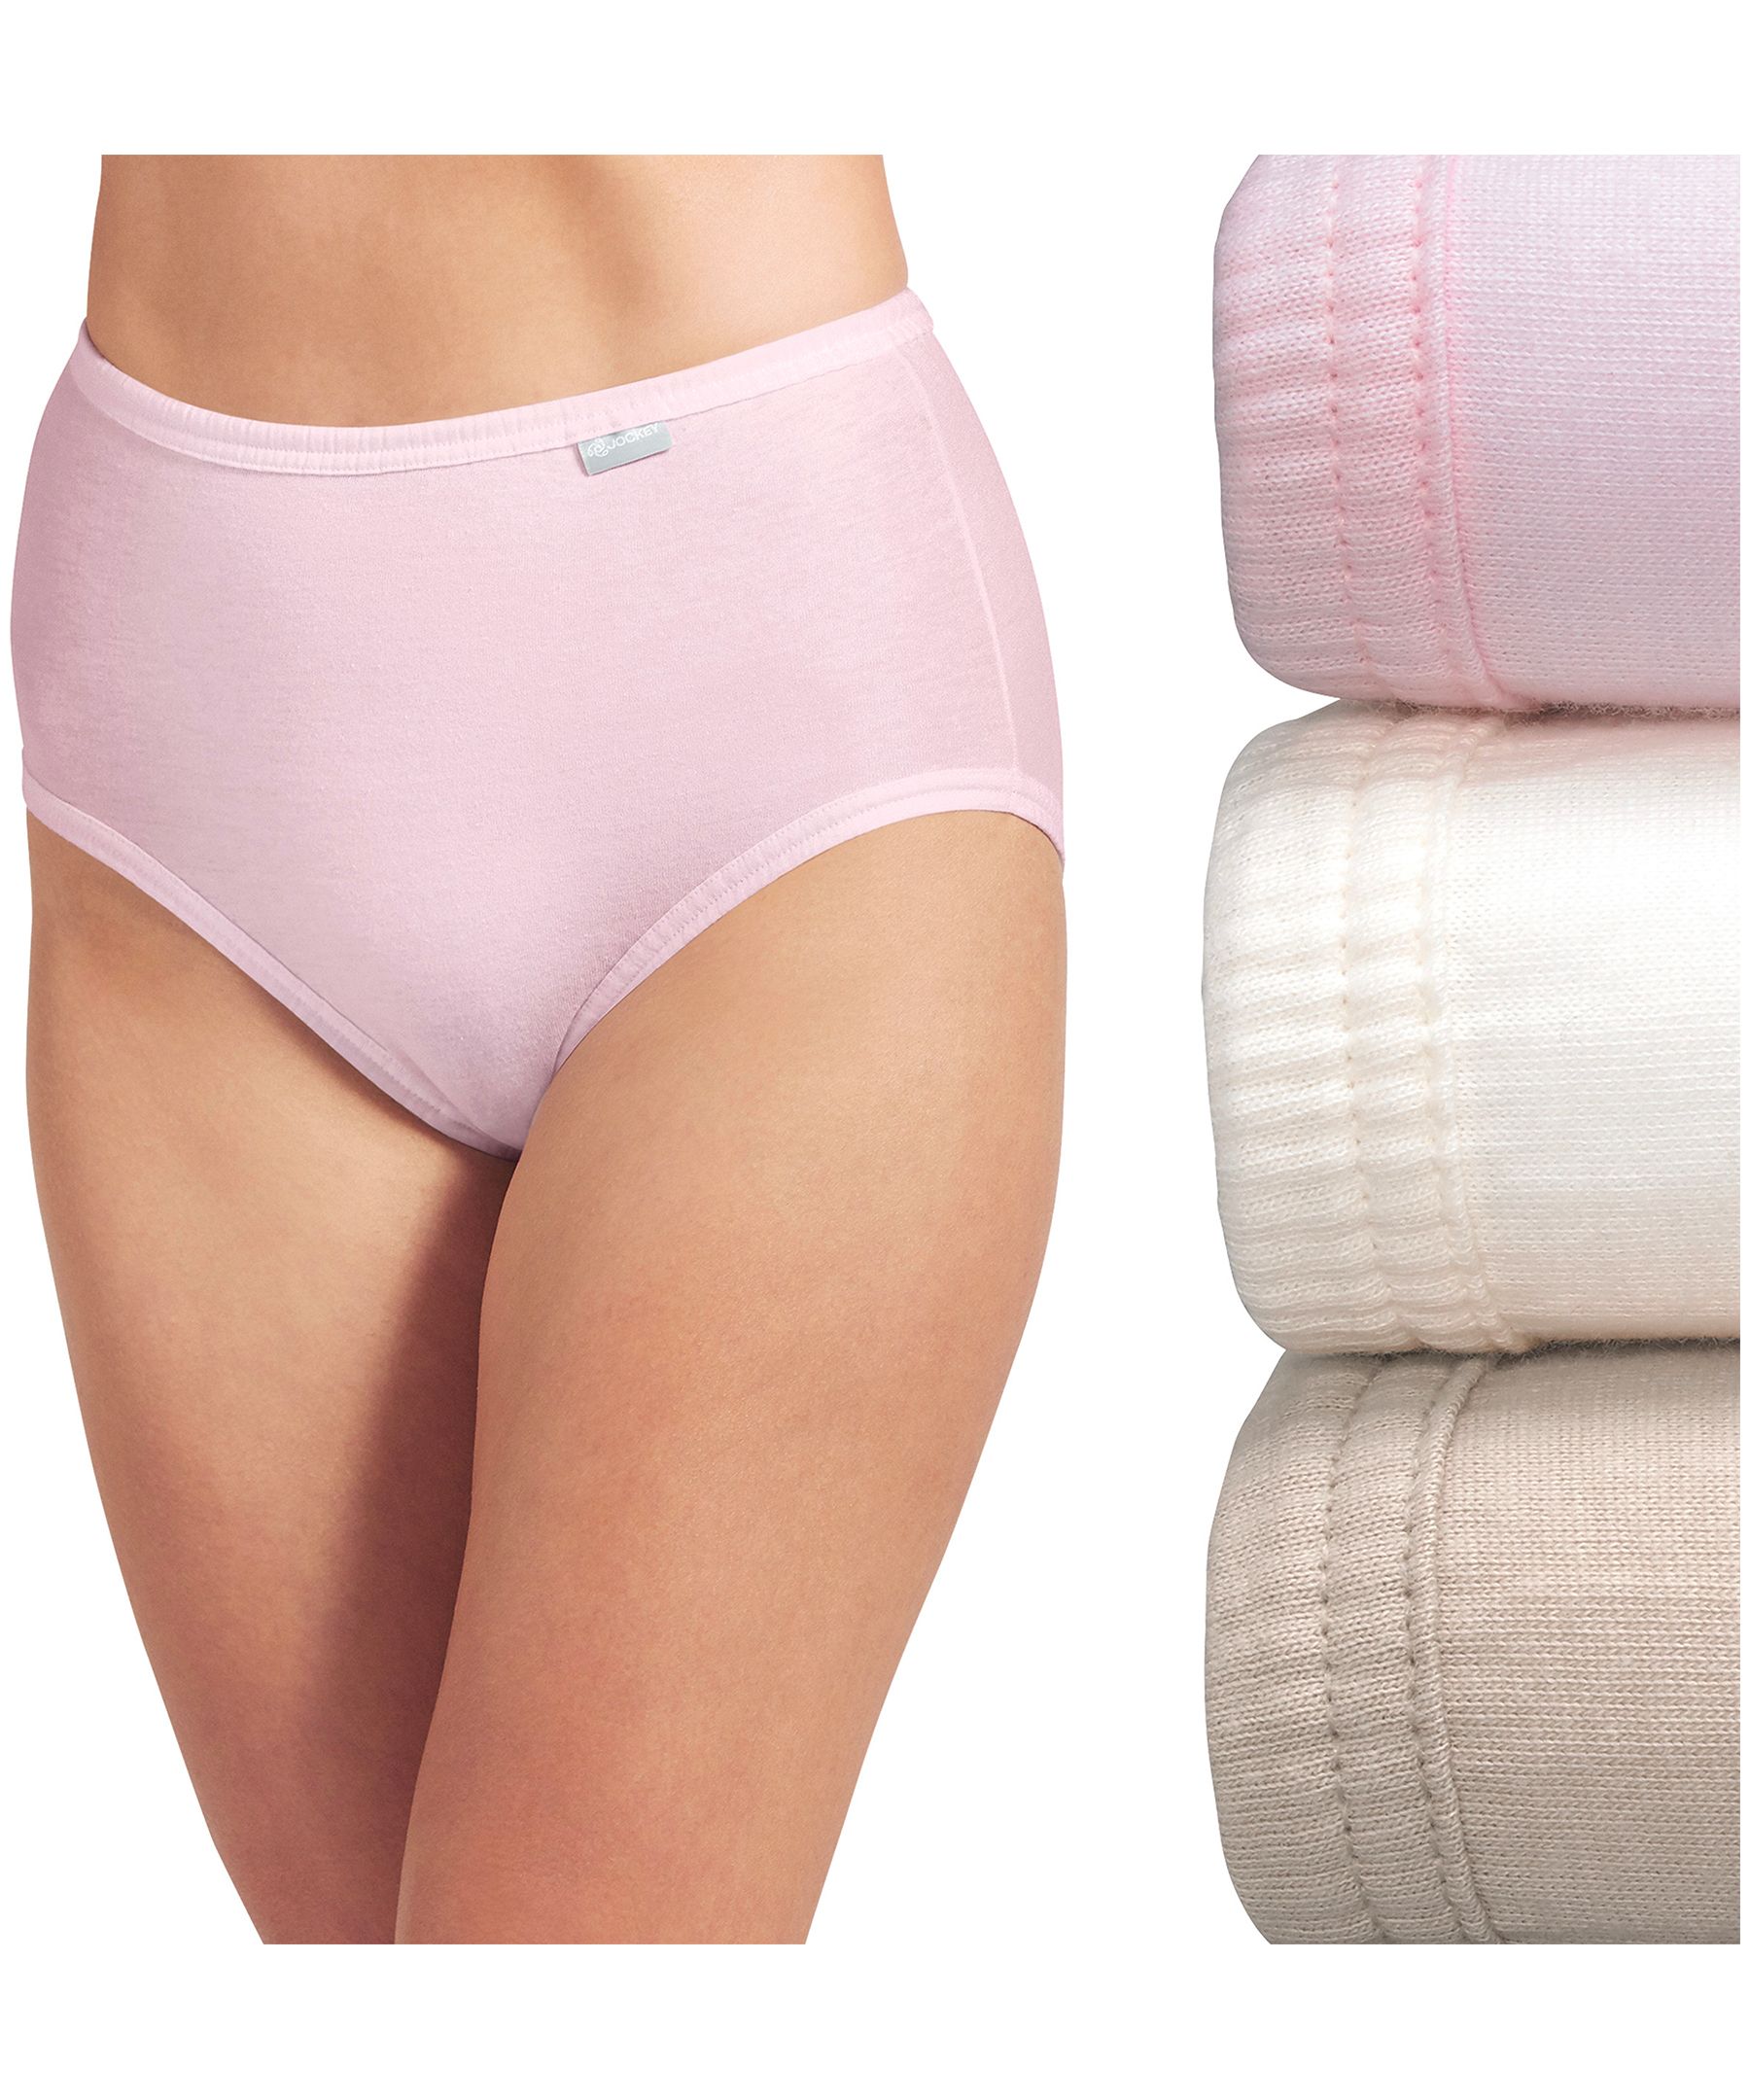 Jockey Women's Plus Size Classic Brief - 3 Pack 10 Sienna Sunset/simple  Pink Stripe/ivory : Target